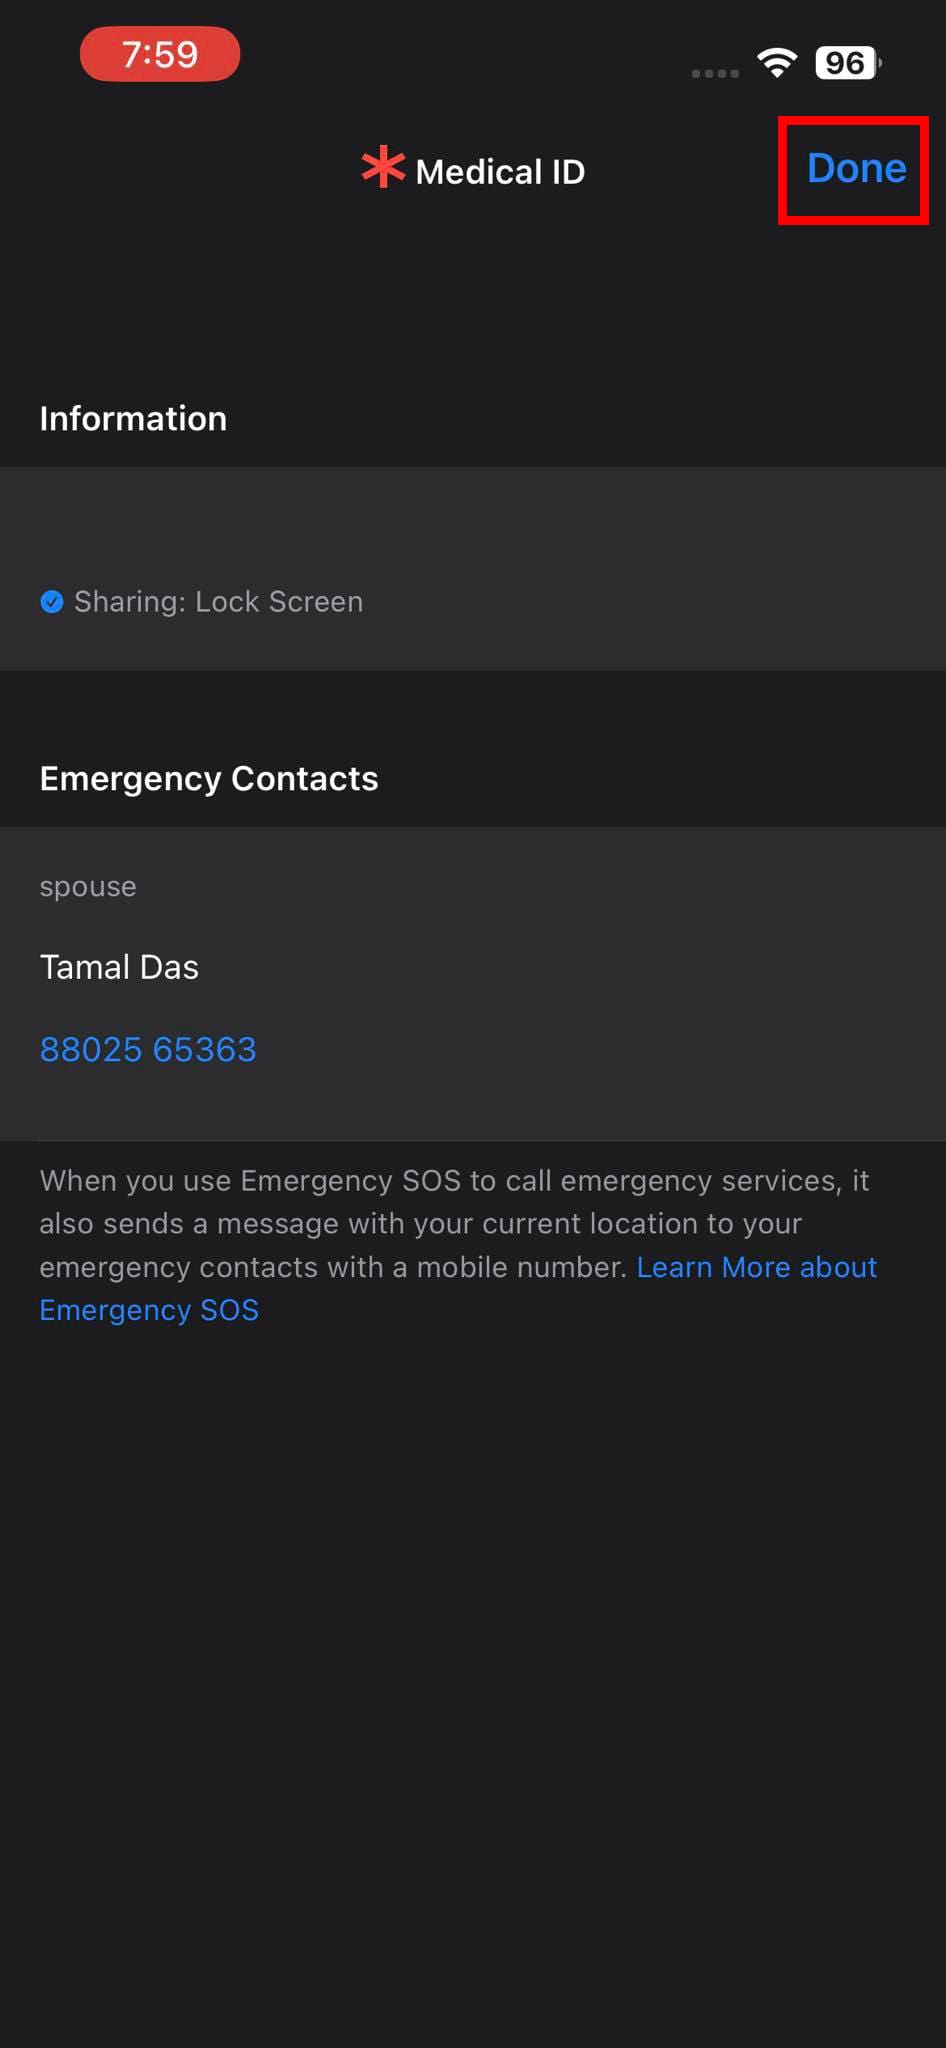 Medical ID screen of Emergency SOS